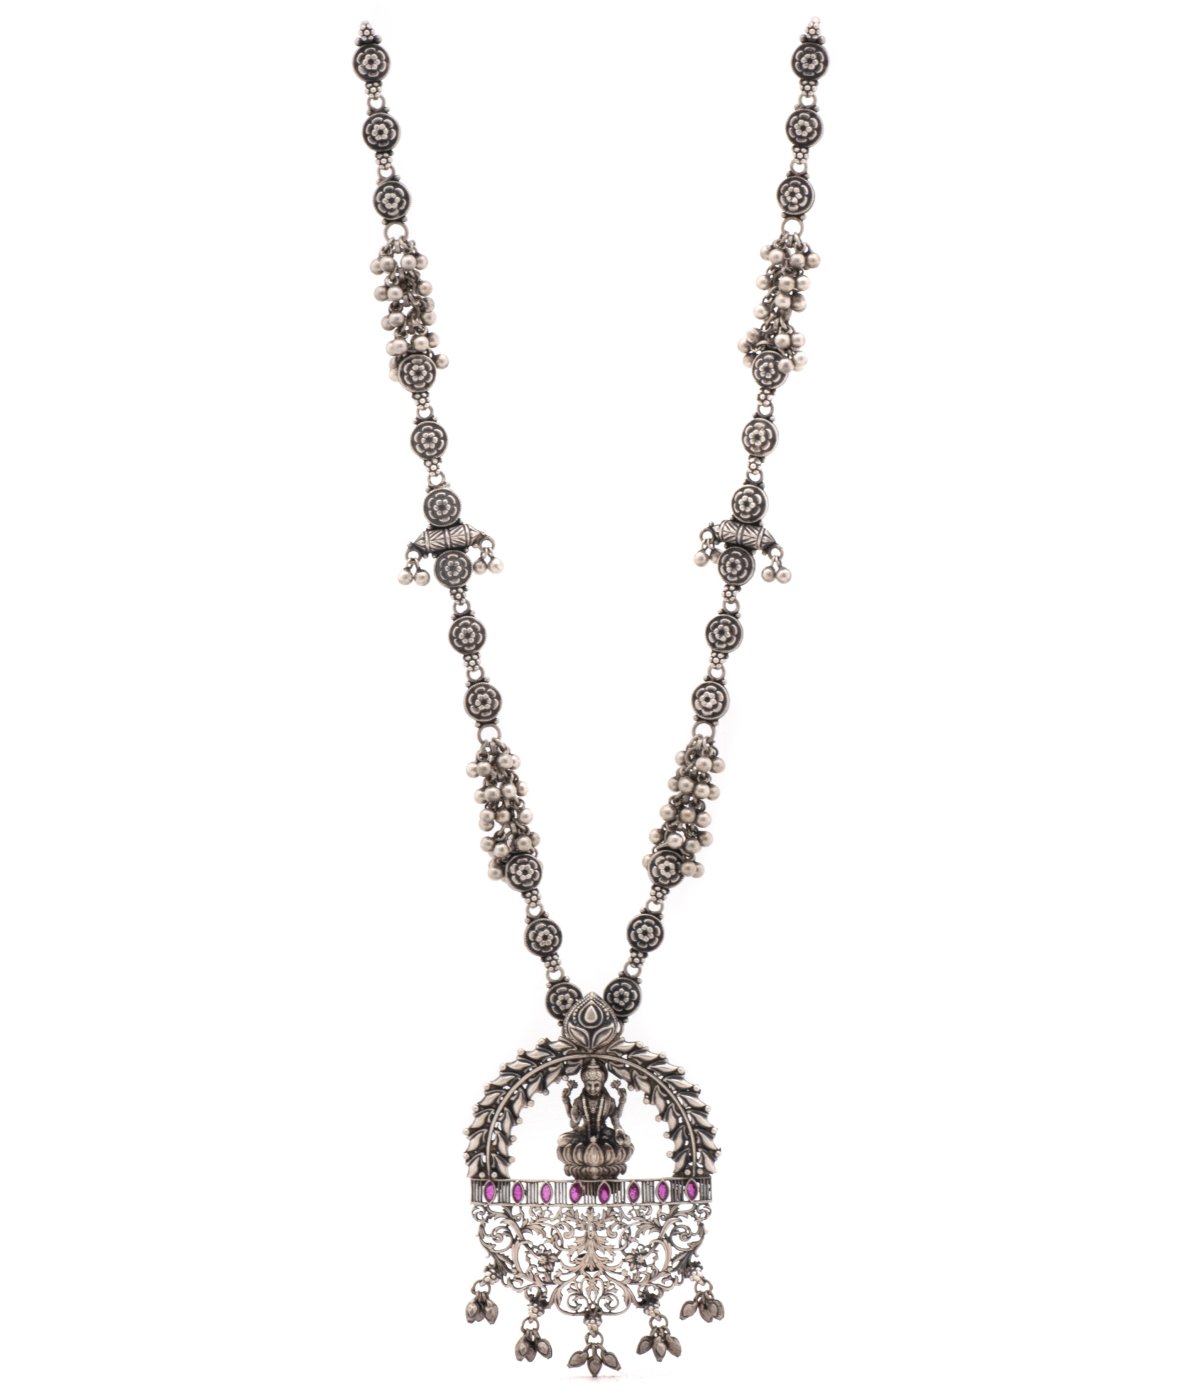 Oxidised Silver Gajalakshmi Mala Necklace For Women and Girls